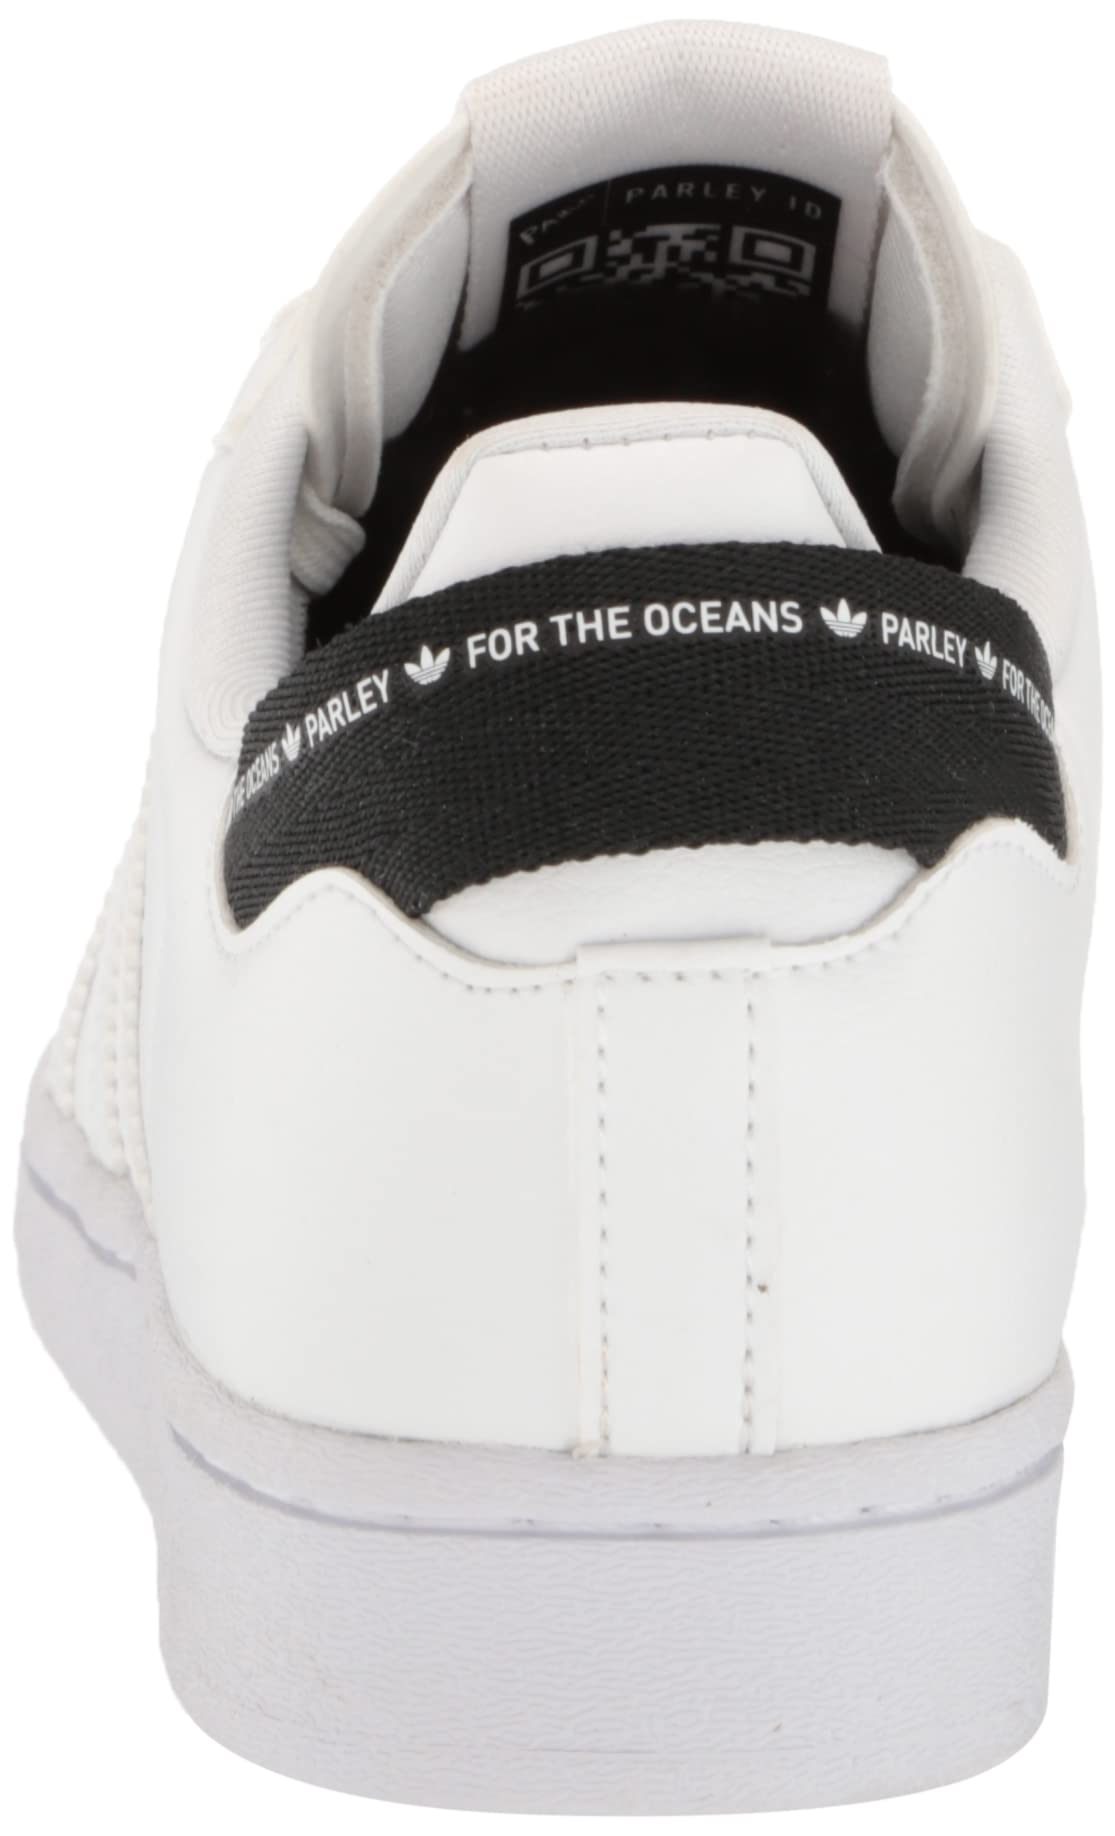 adidas Originals Superstar Sneaker, White/White/Core Black, 7 US Unisex Big Kid